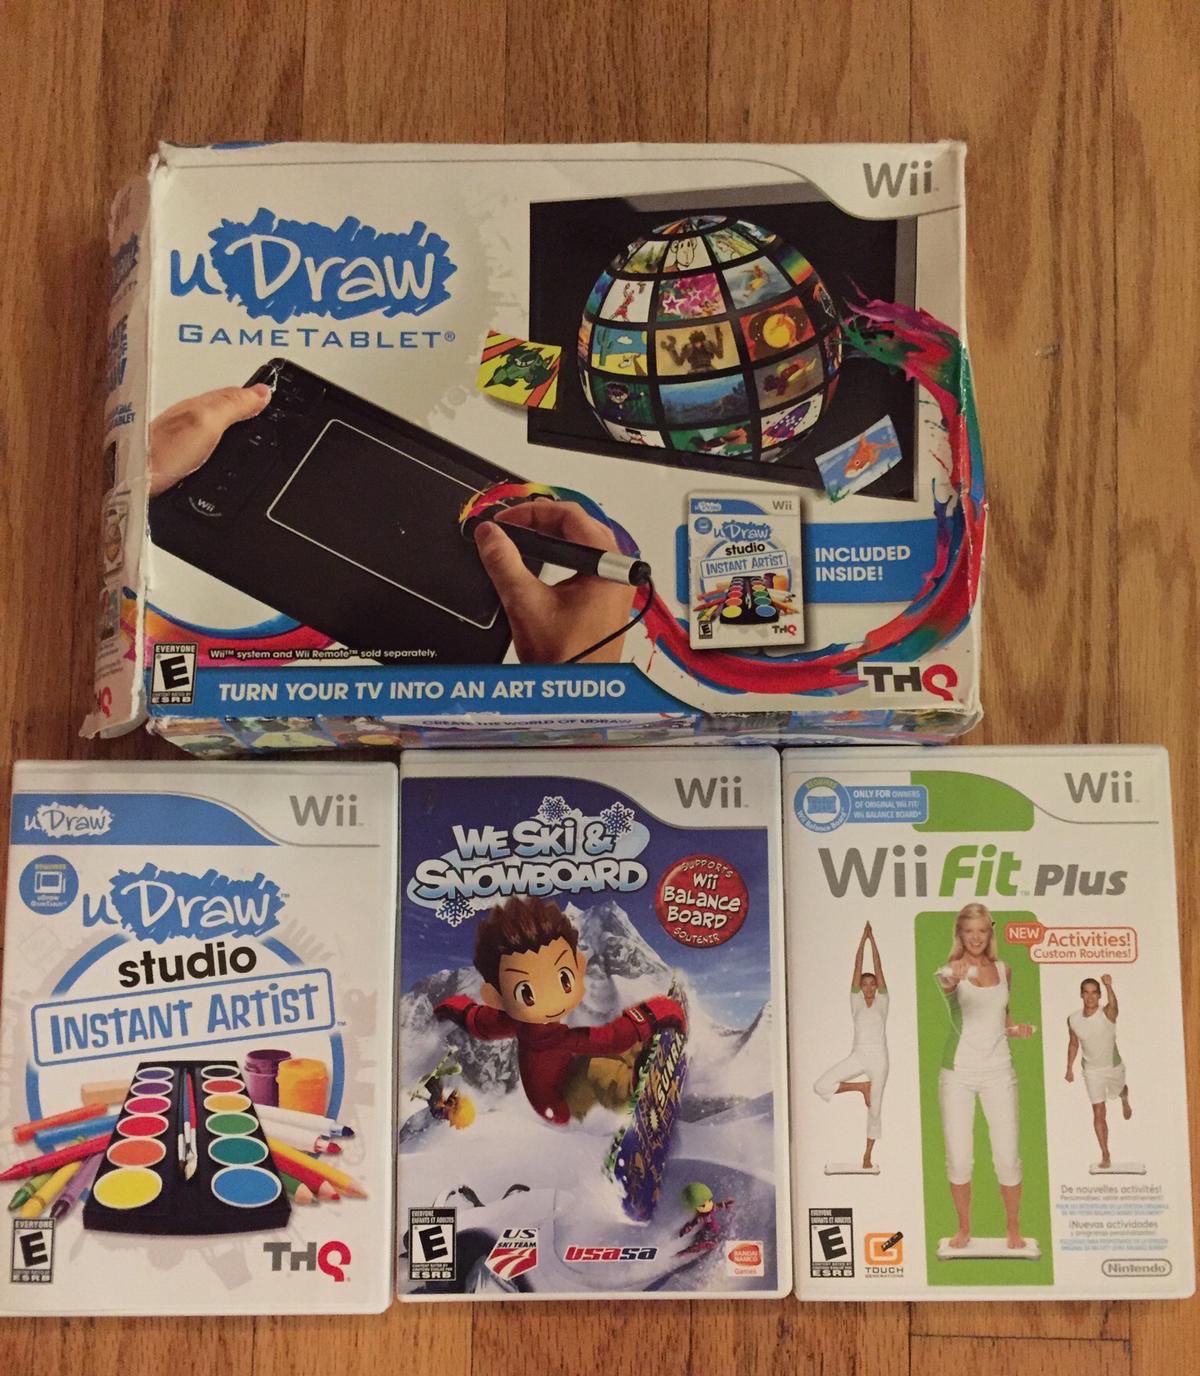 Three Wii games and balance board